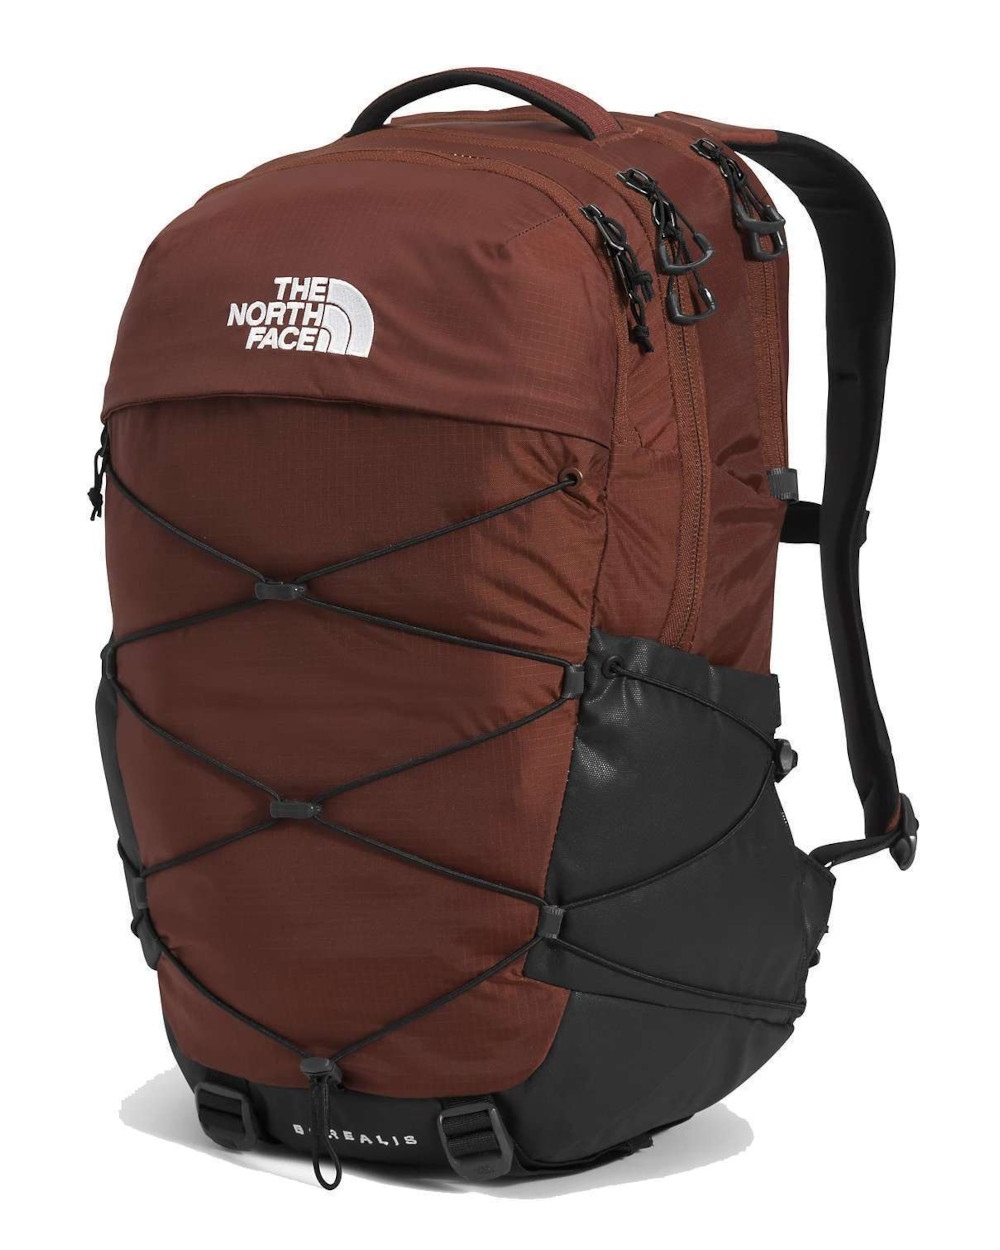  The North Face Zaino Bag Backpack Marrone Borealis Trekking lifestyle